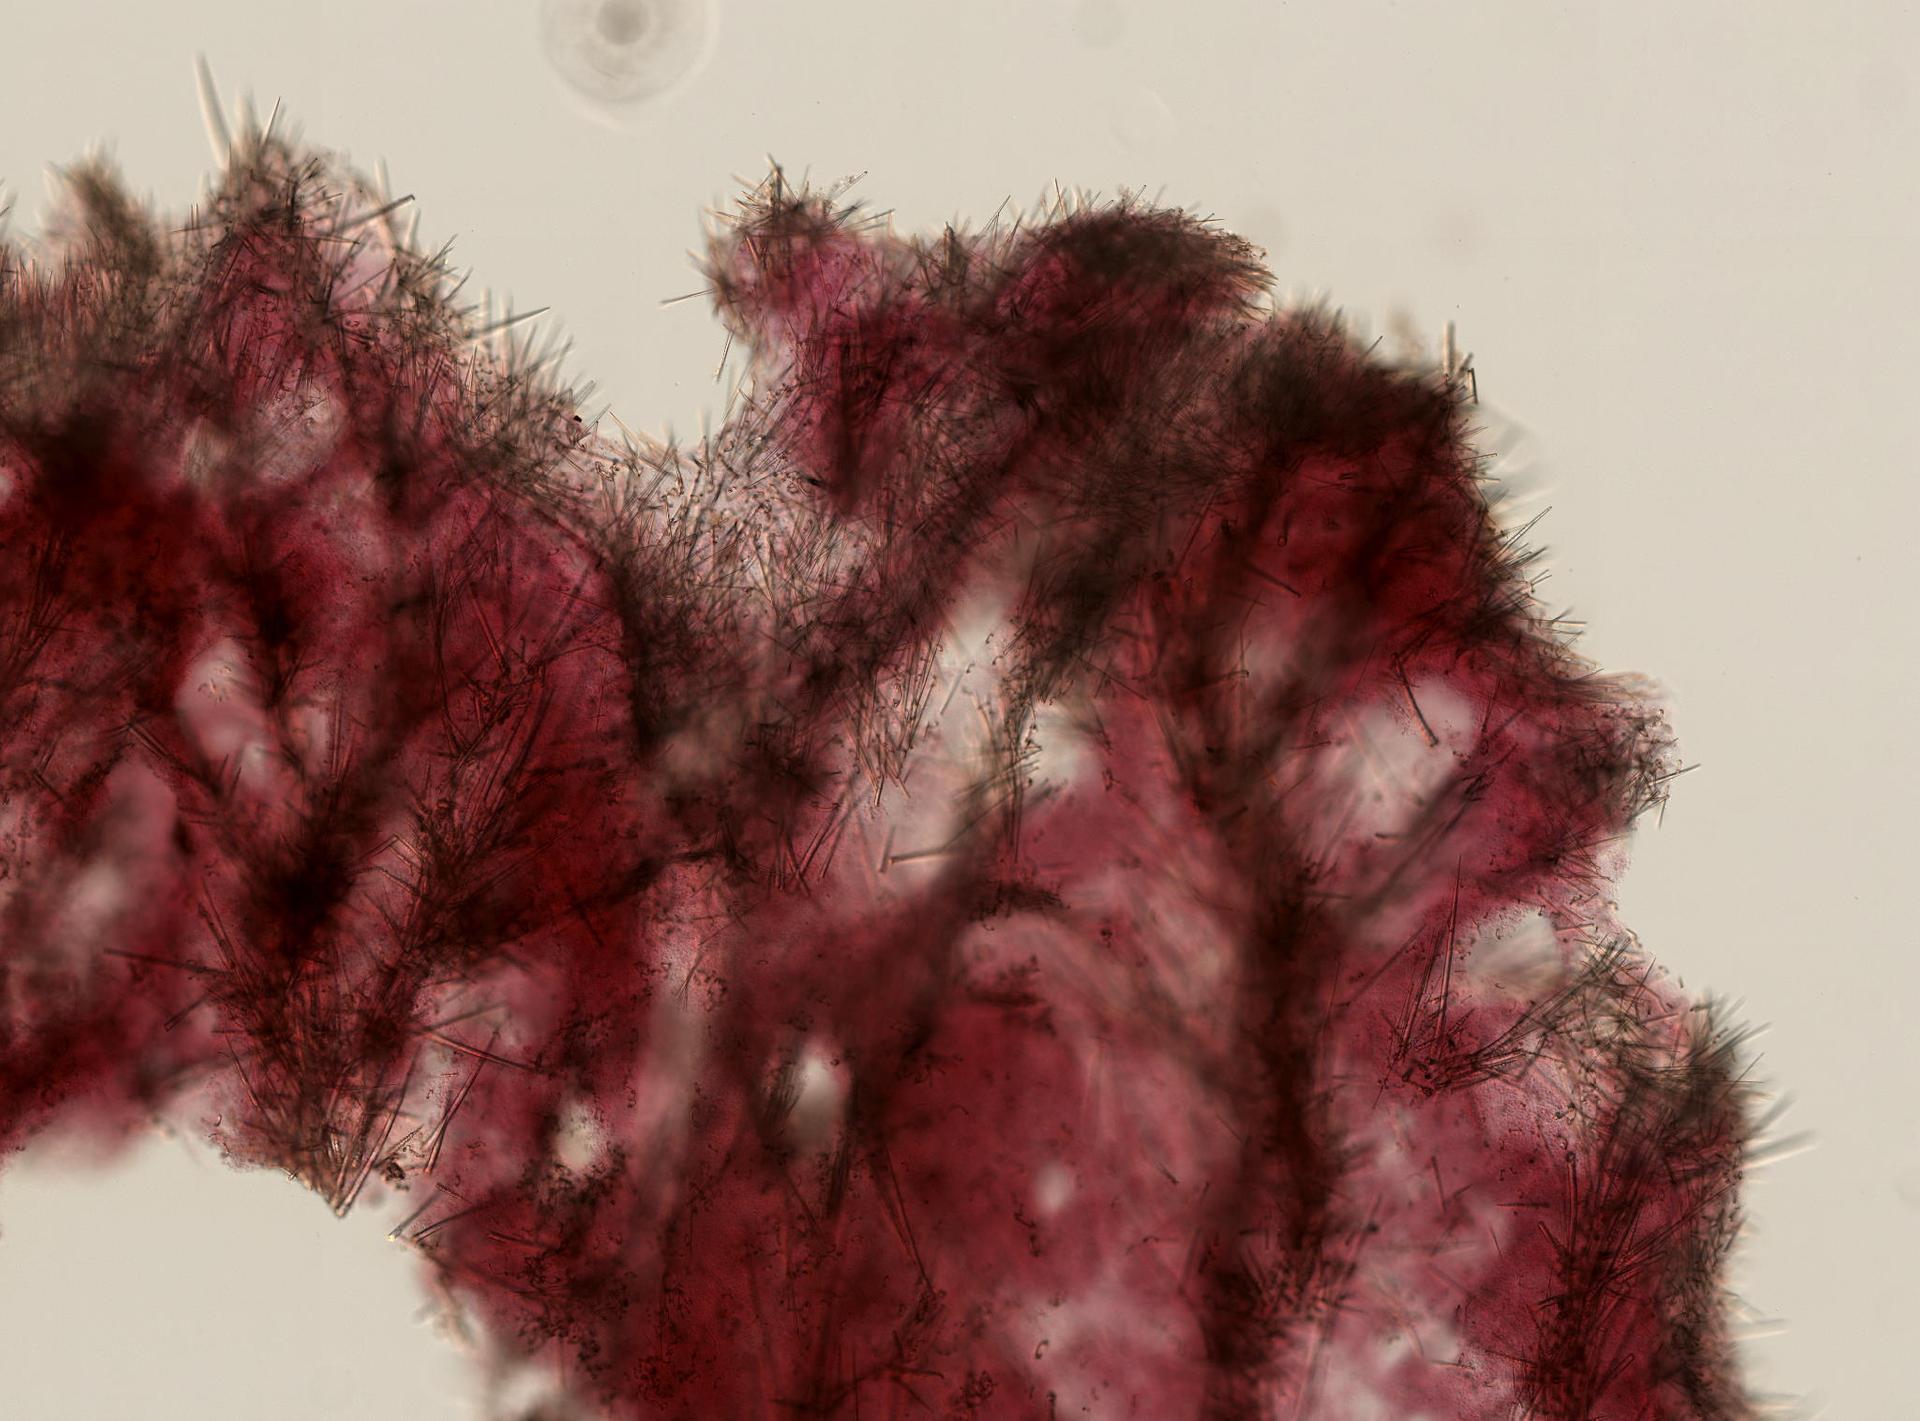 Clathria spongigartina image